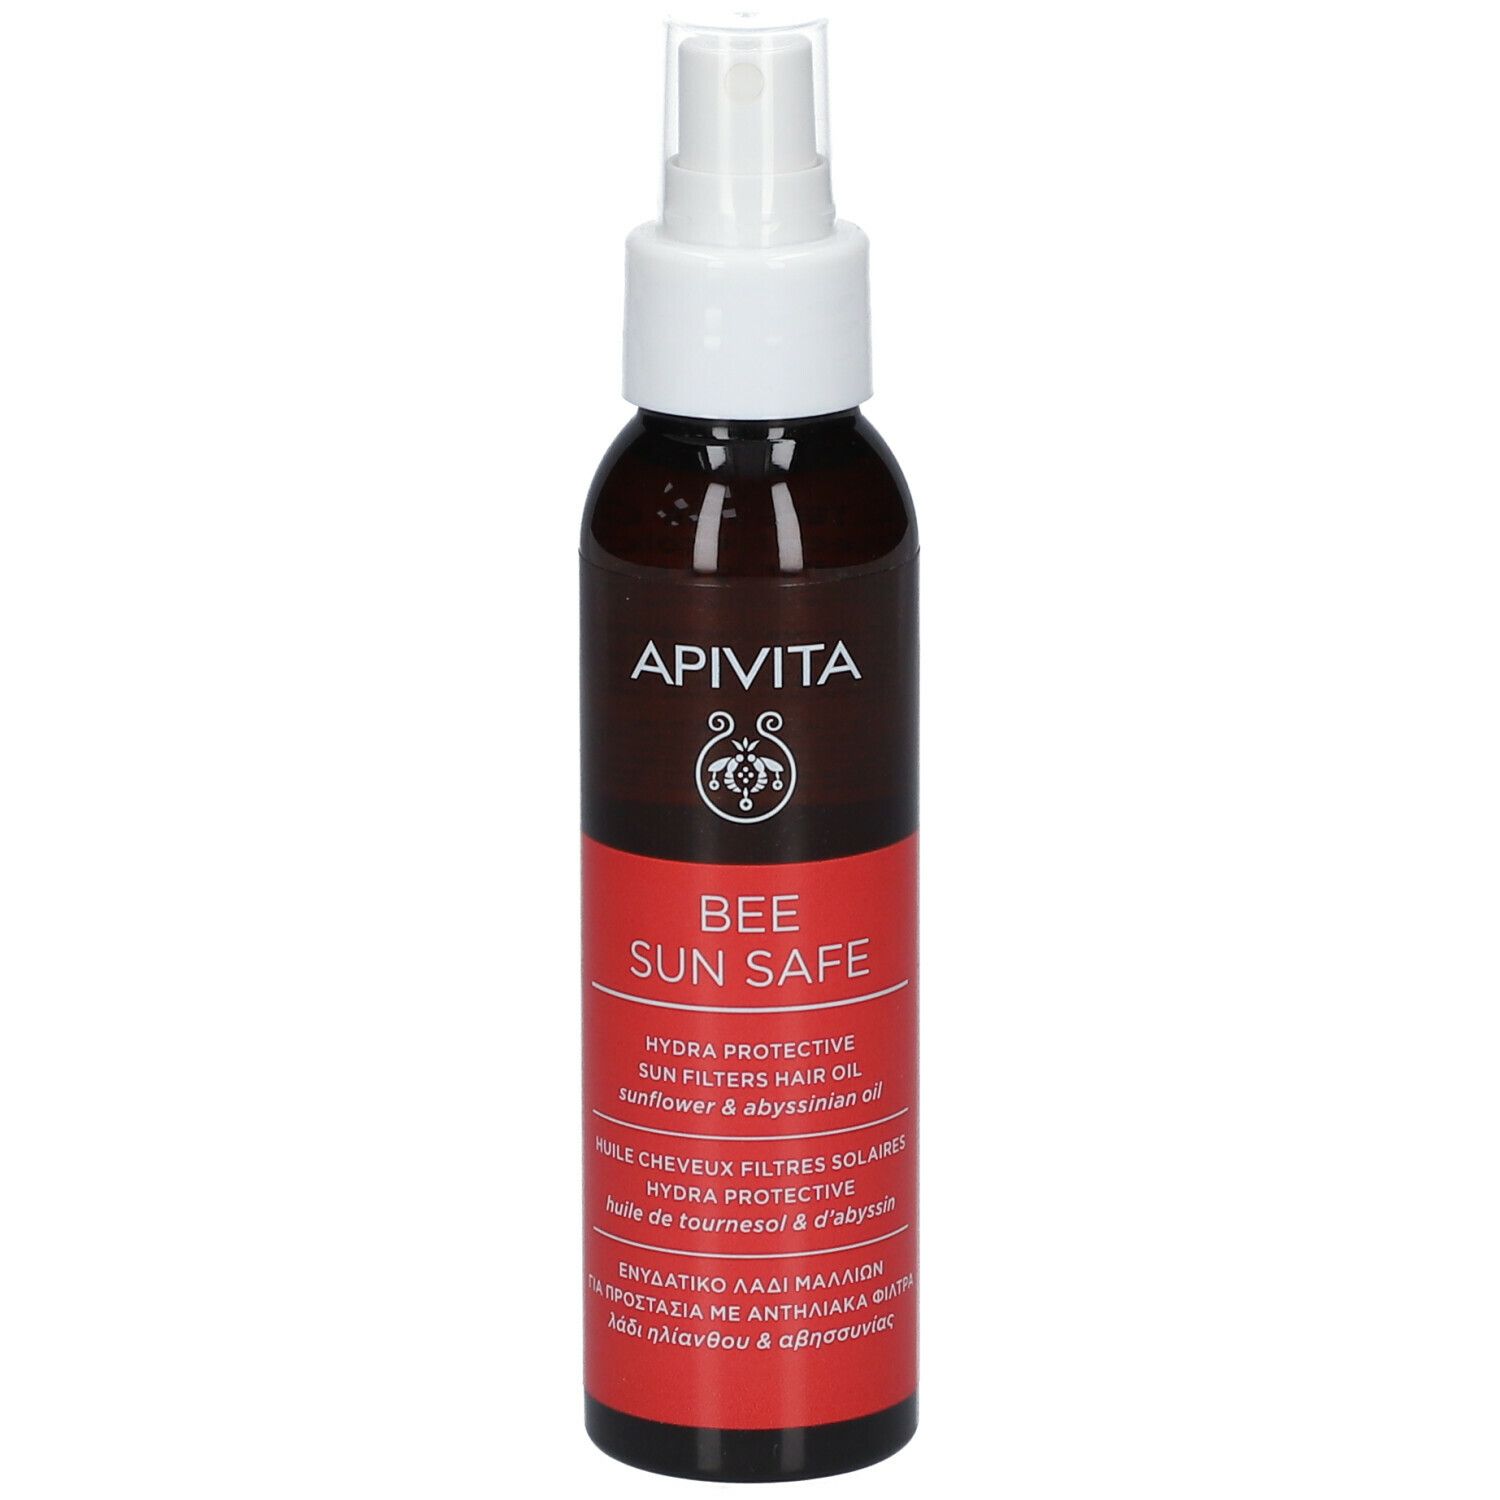 Apivita Bee Sun Safe Huile Cheveux Filtres Solaires Hydra Protective Huile de Tournesol & d'Abyssin